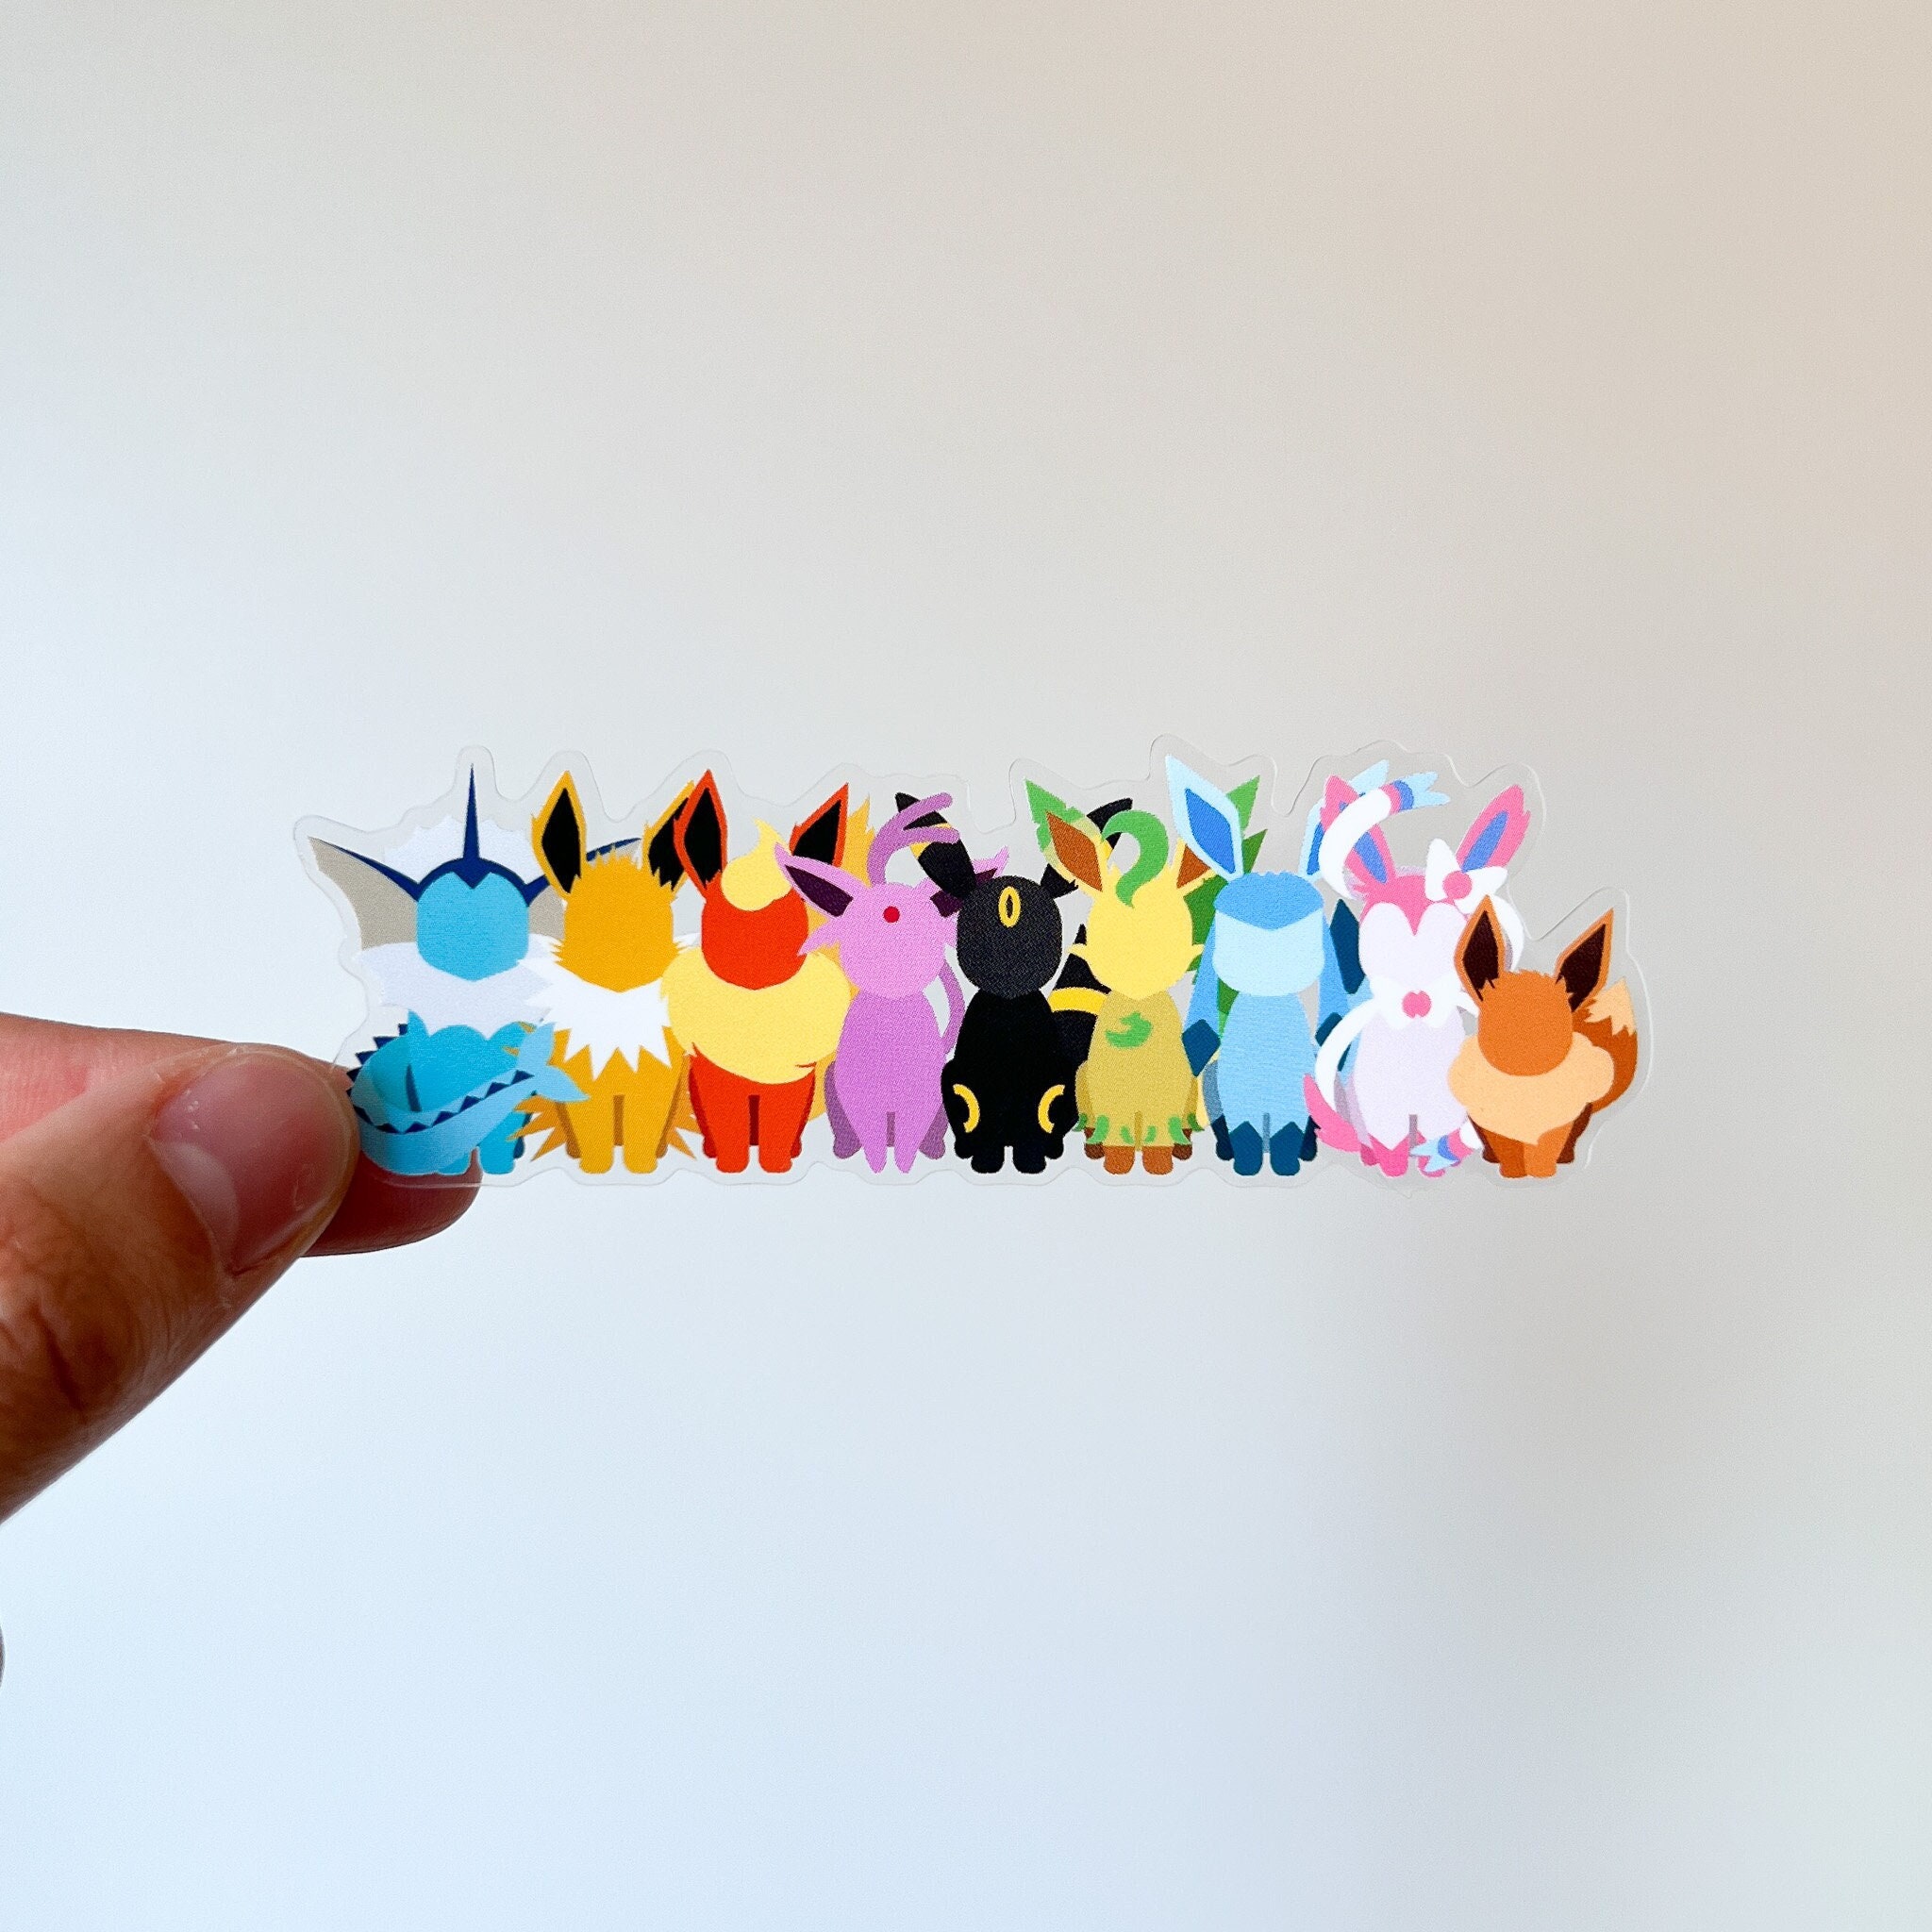 Neon Shiny Eevee Evolution Pack all 9 Pokemon Stickers 